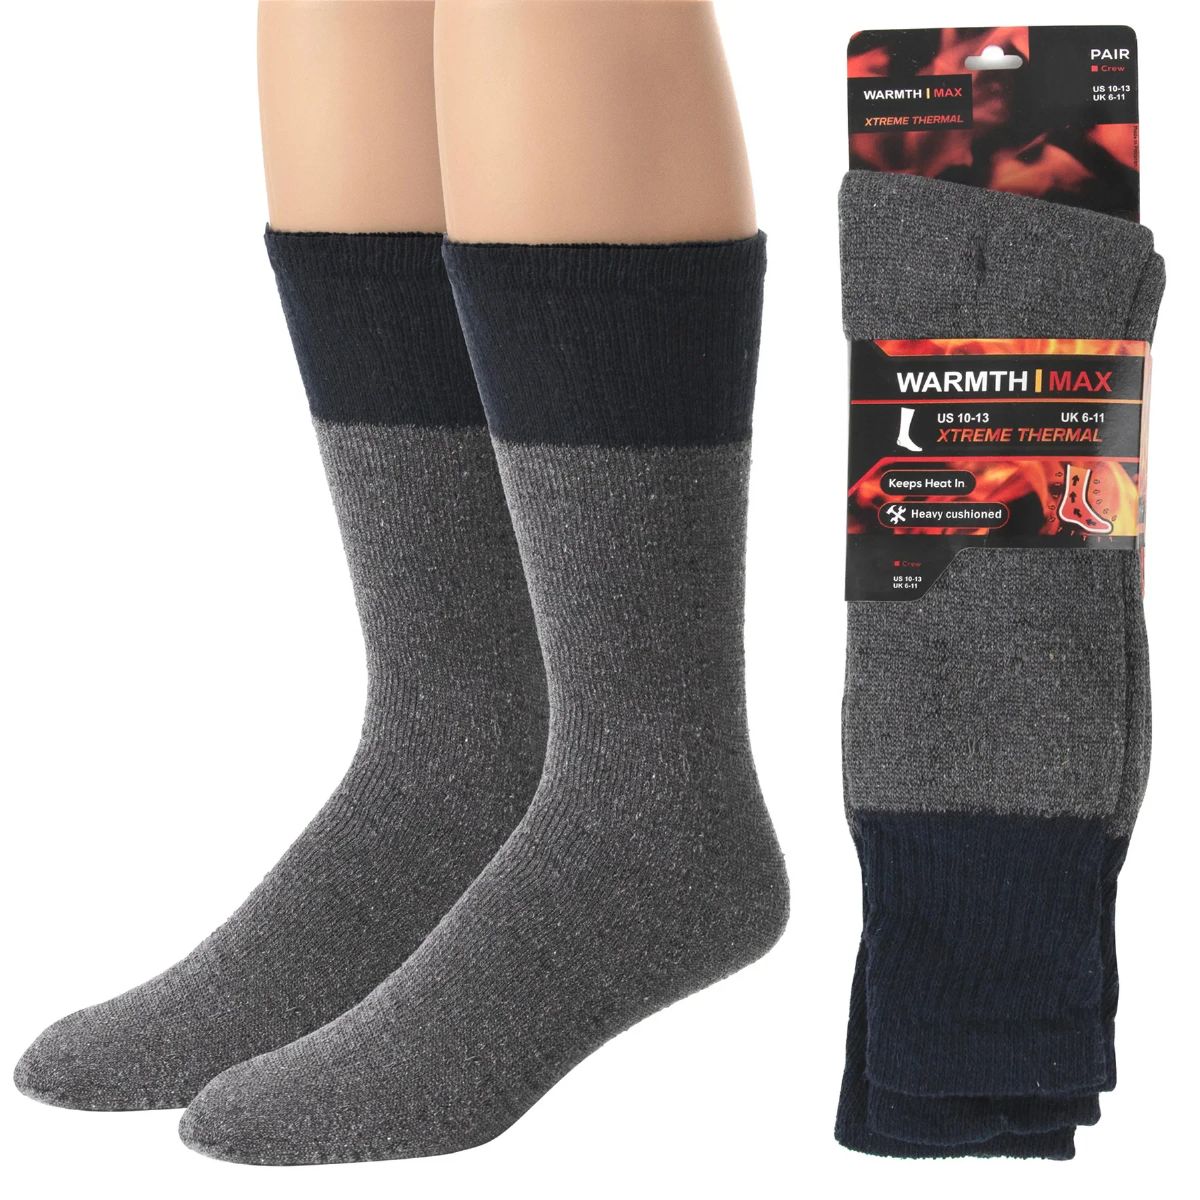 100 Pieces of Wholesale Men's Winter Crew Thermal Socks